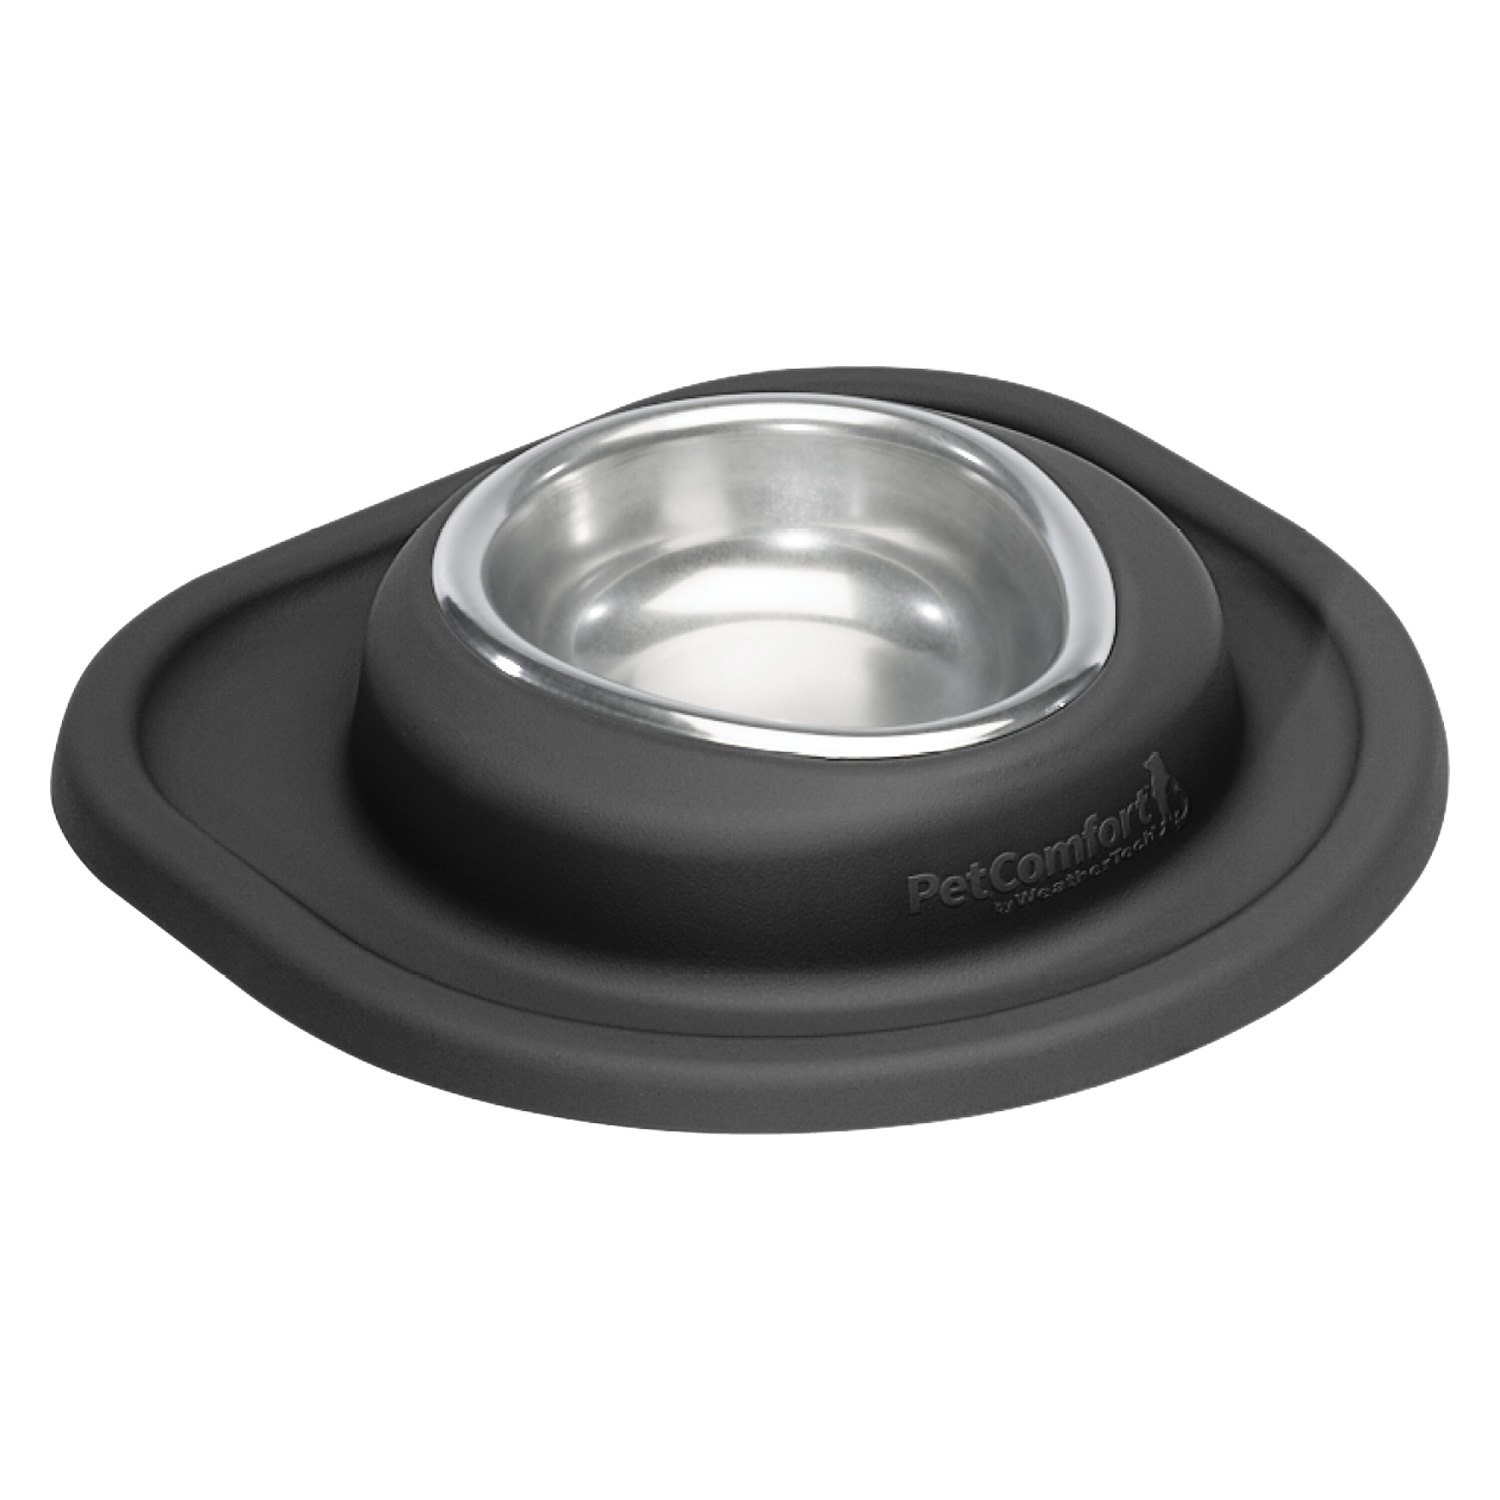 WeatherTech® - Pet Comfort™ Single Stainless Steel Low Pet Bowl 